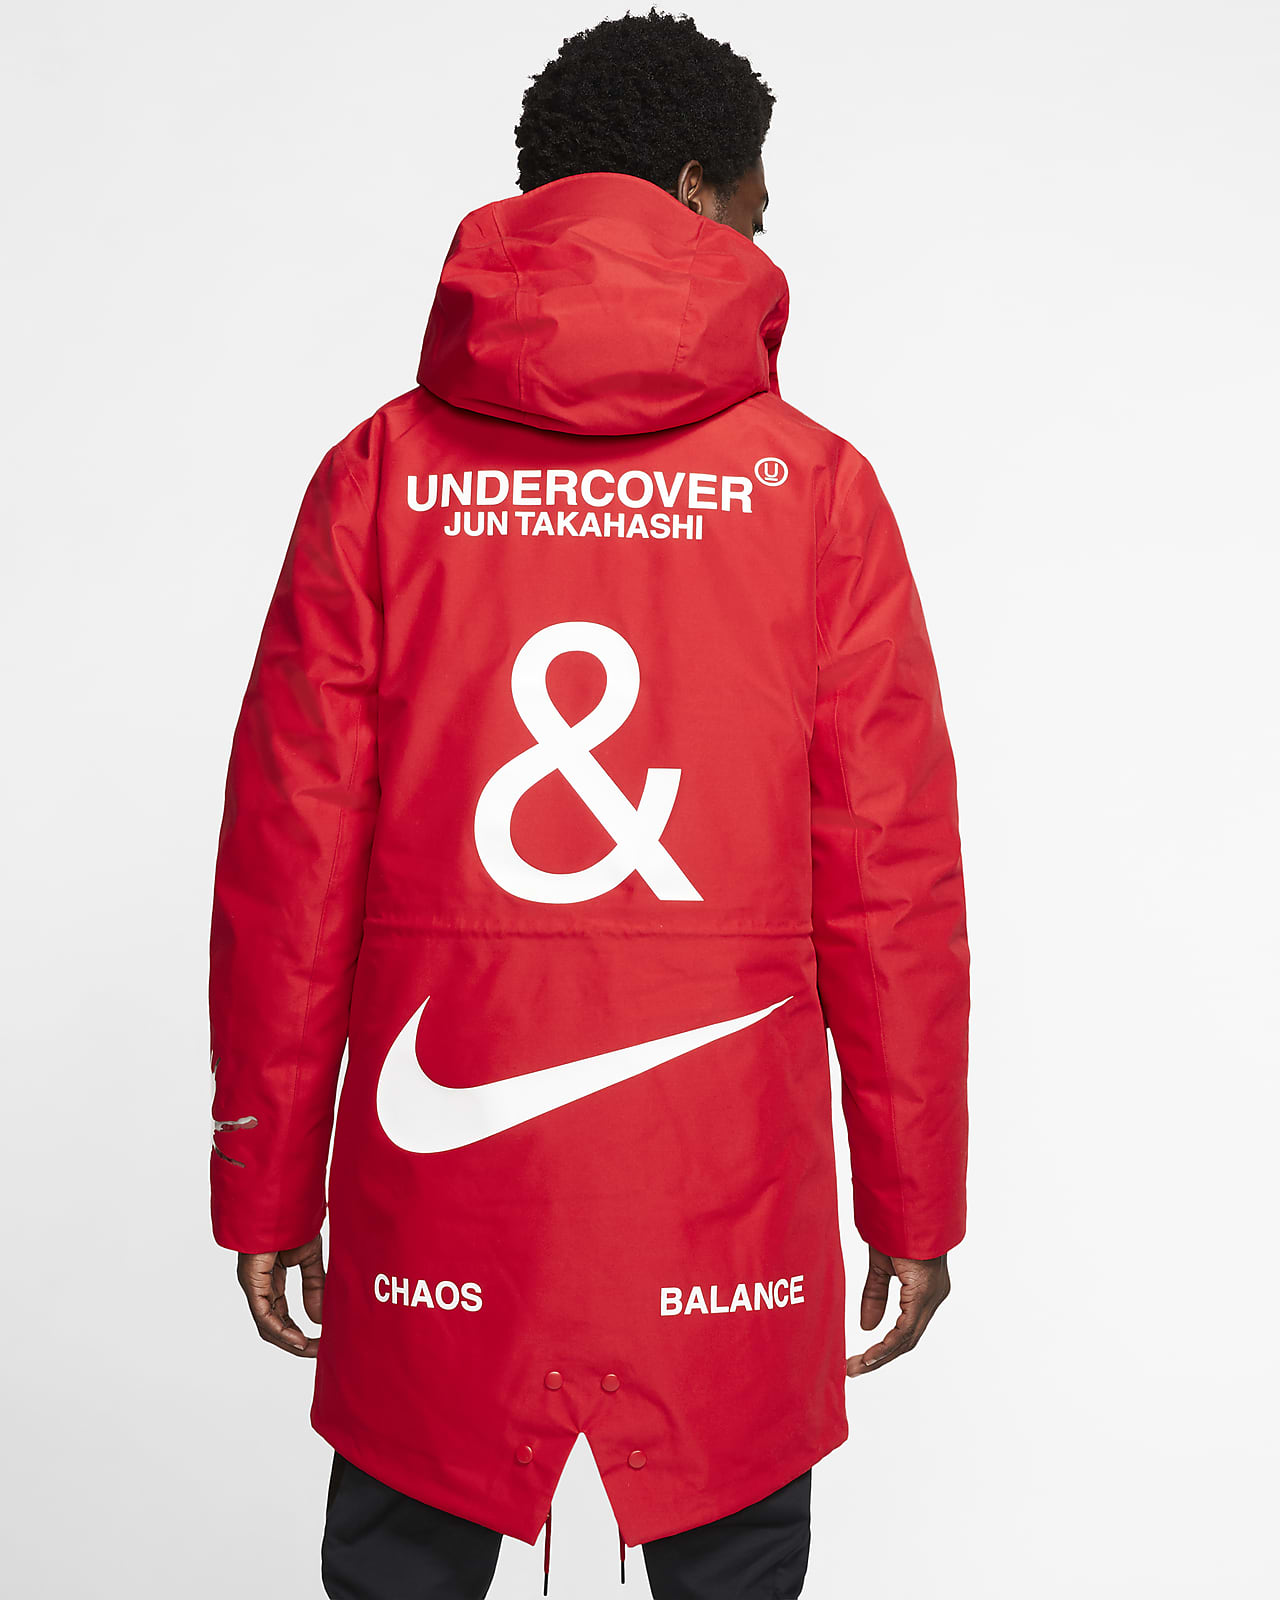 undercover x nike jacket